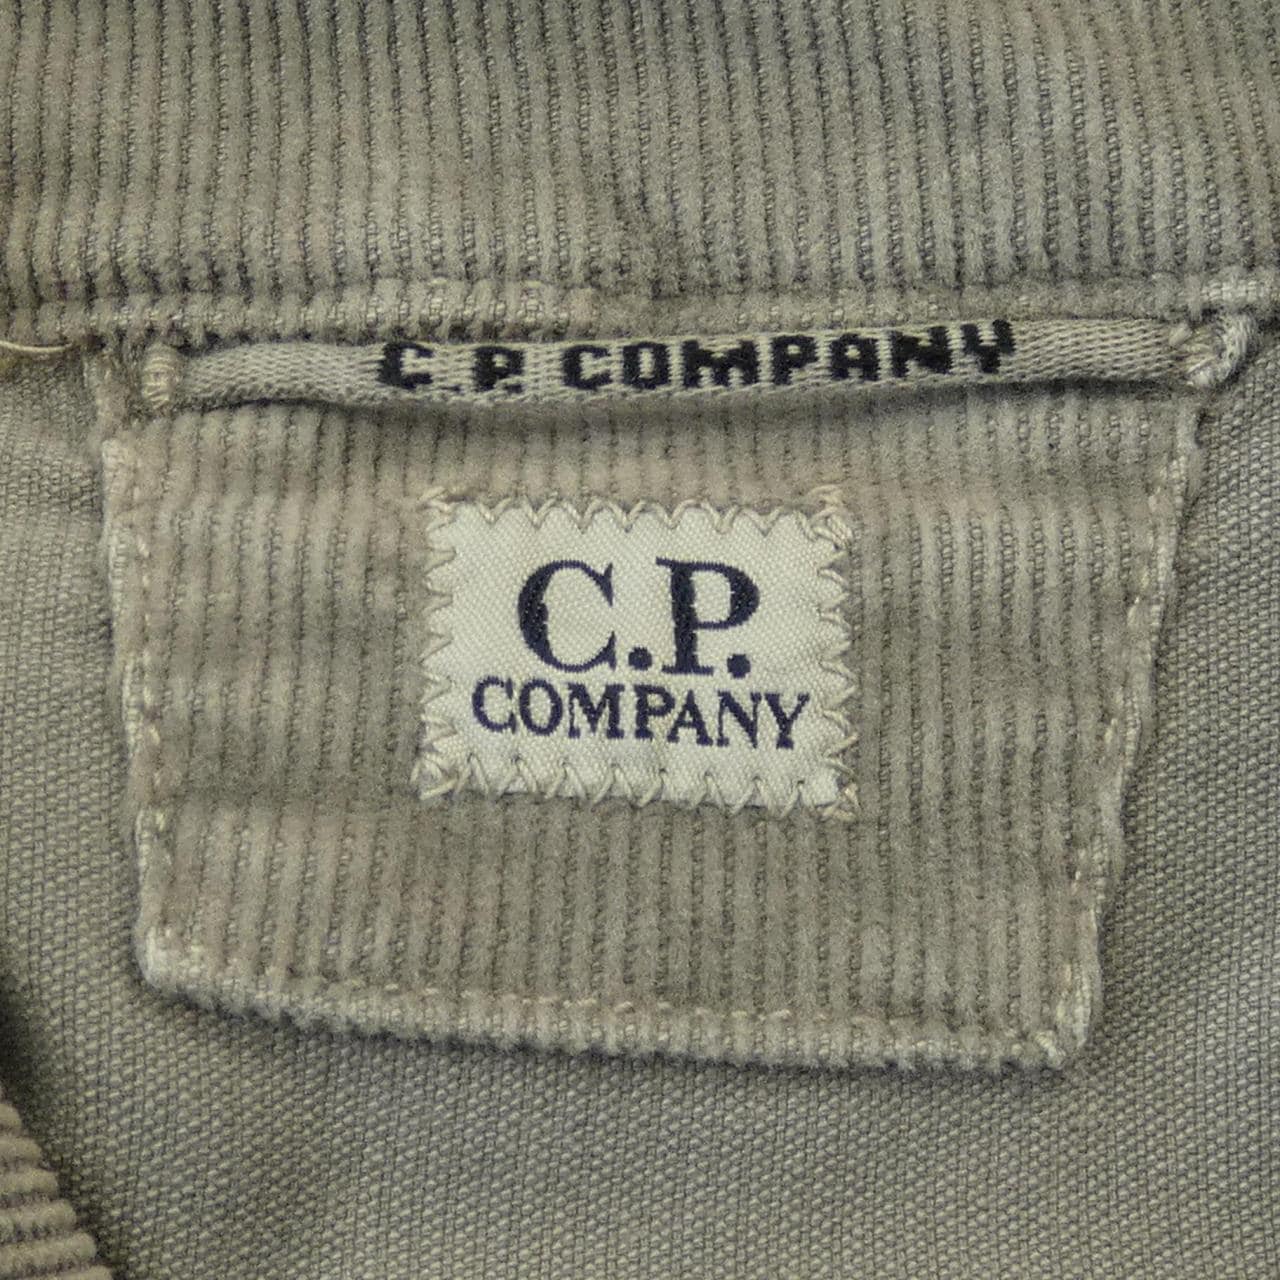 CIPCOMPANY公司C.P COMPANY夹克